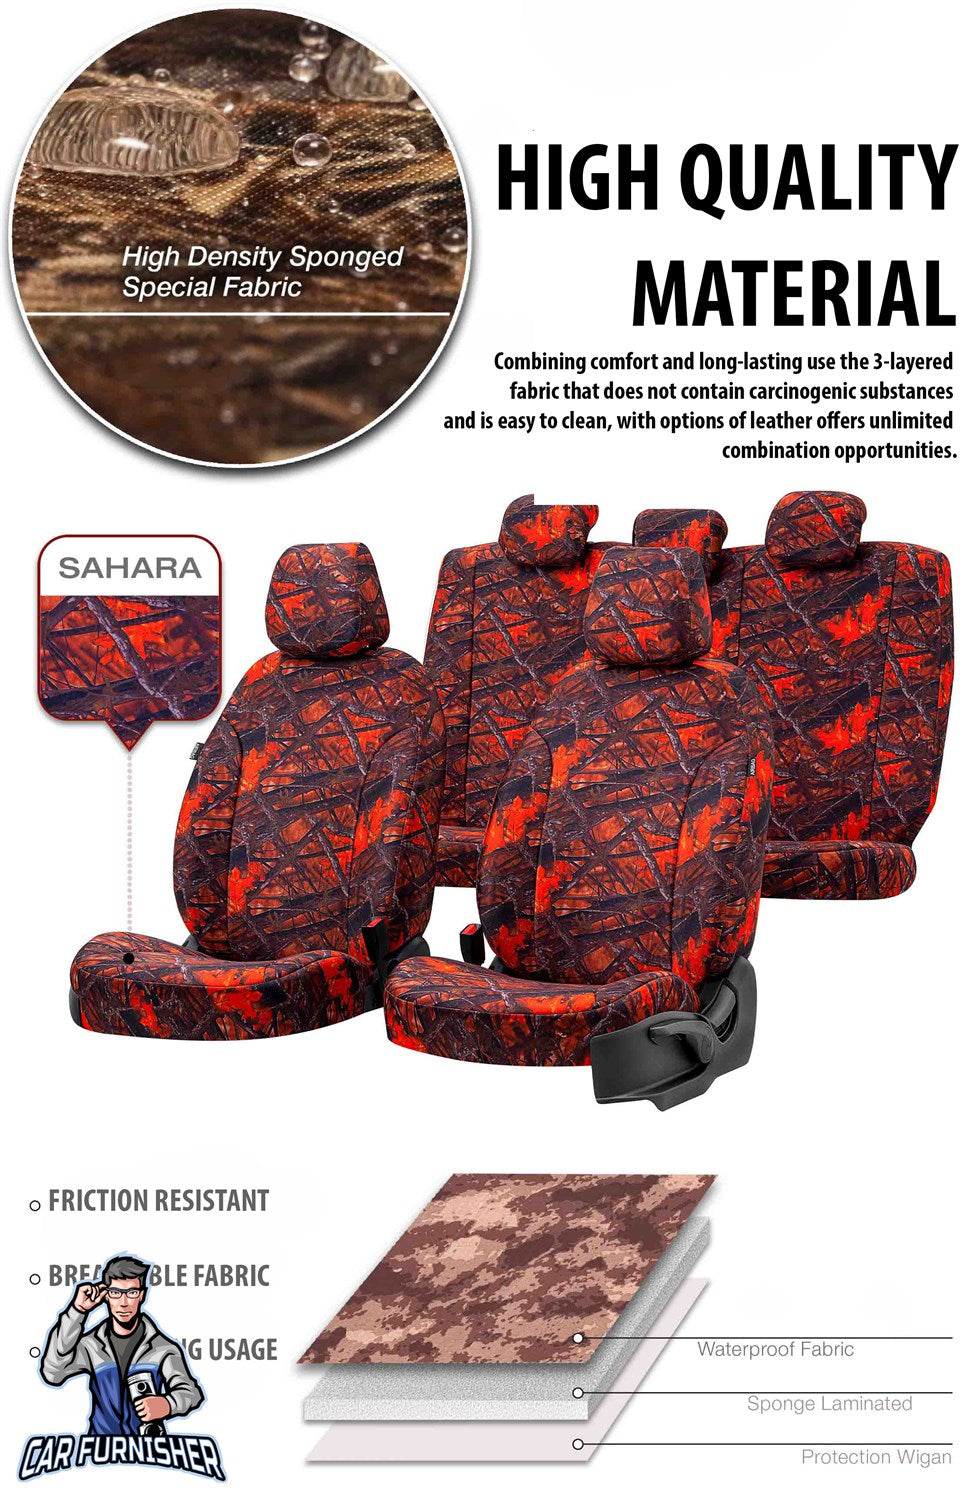 Bmw 2 Series Seat Cover Camouflage Waterproof Design Gobi Camo Waterproof Fabric